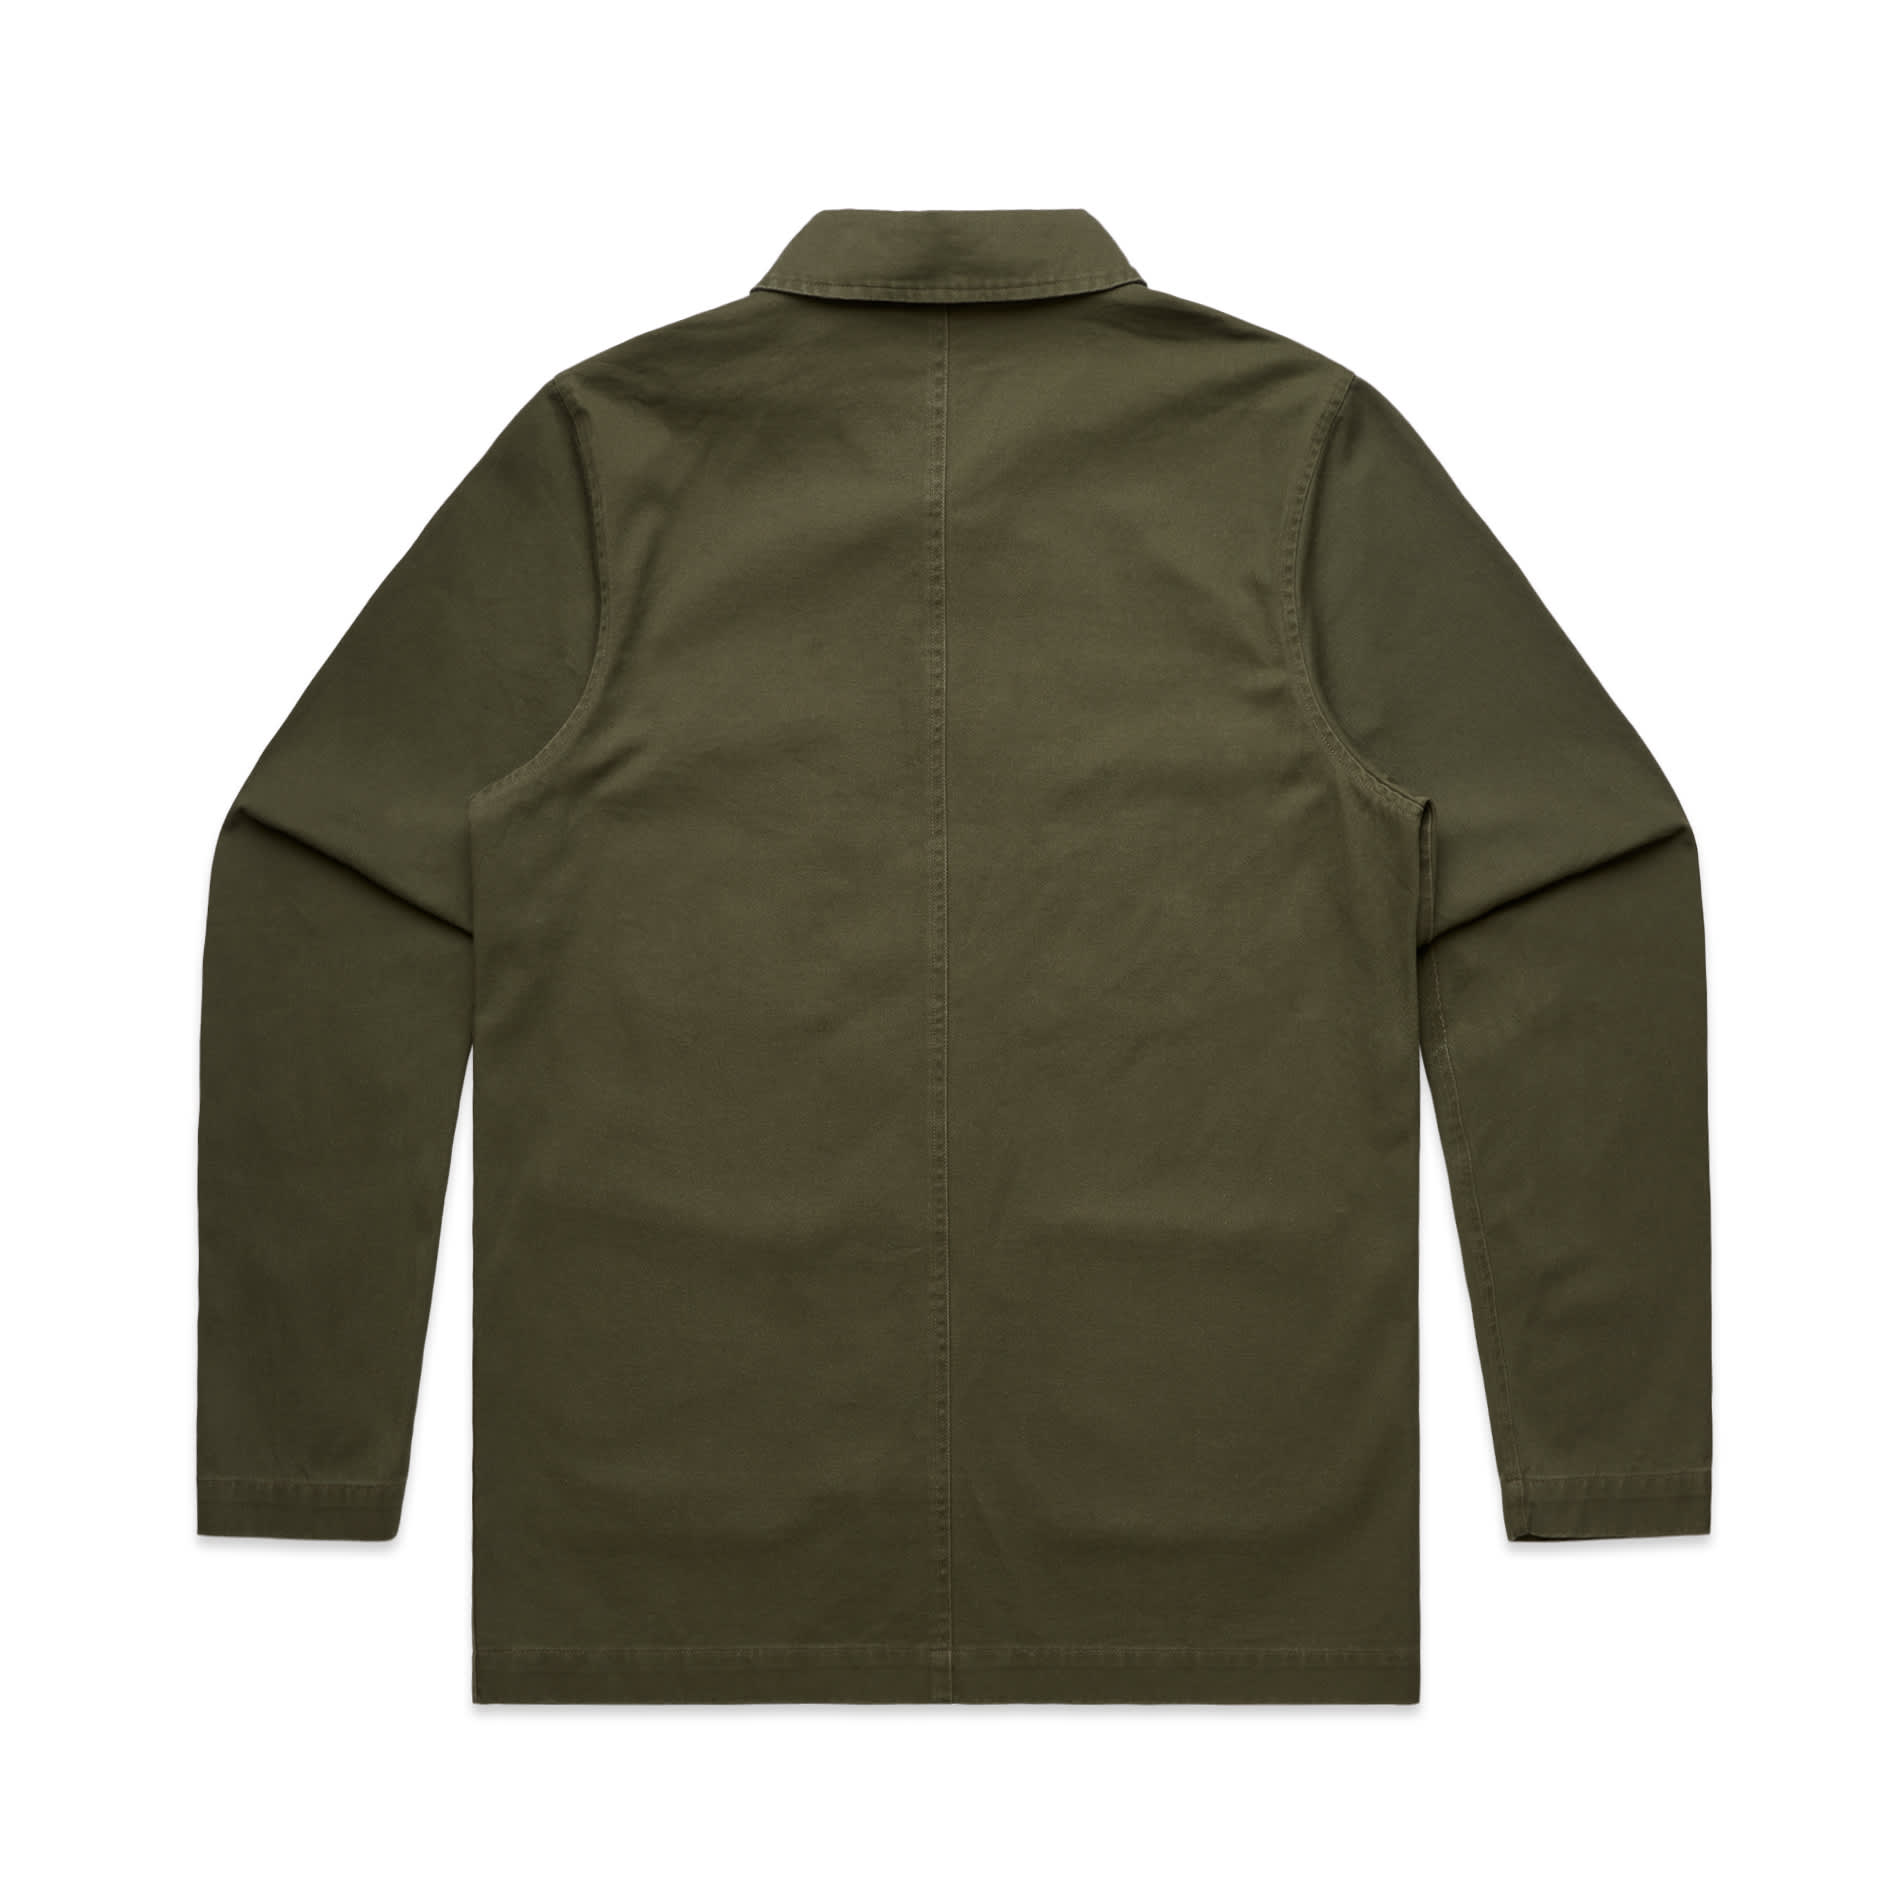 5522_chore_jacket_army_back.jpg